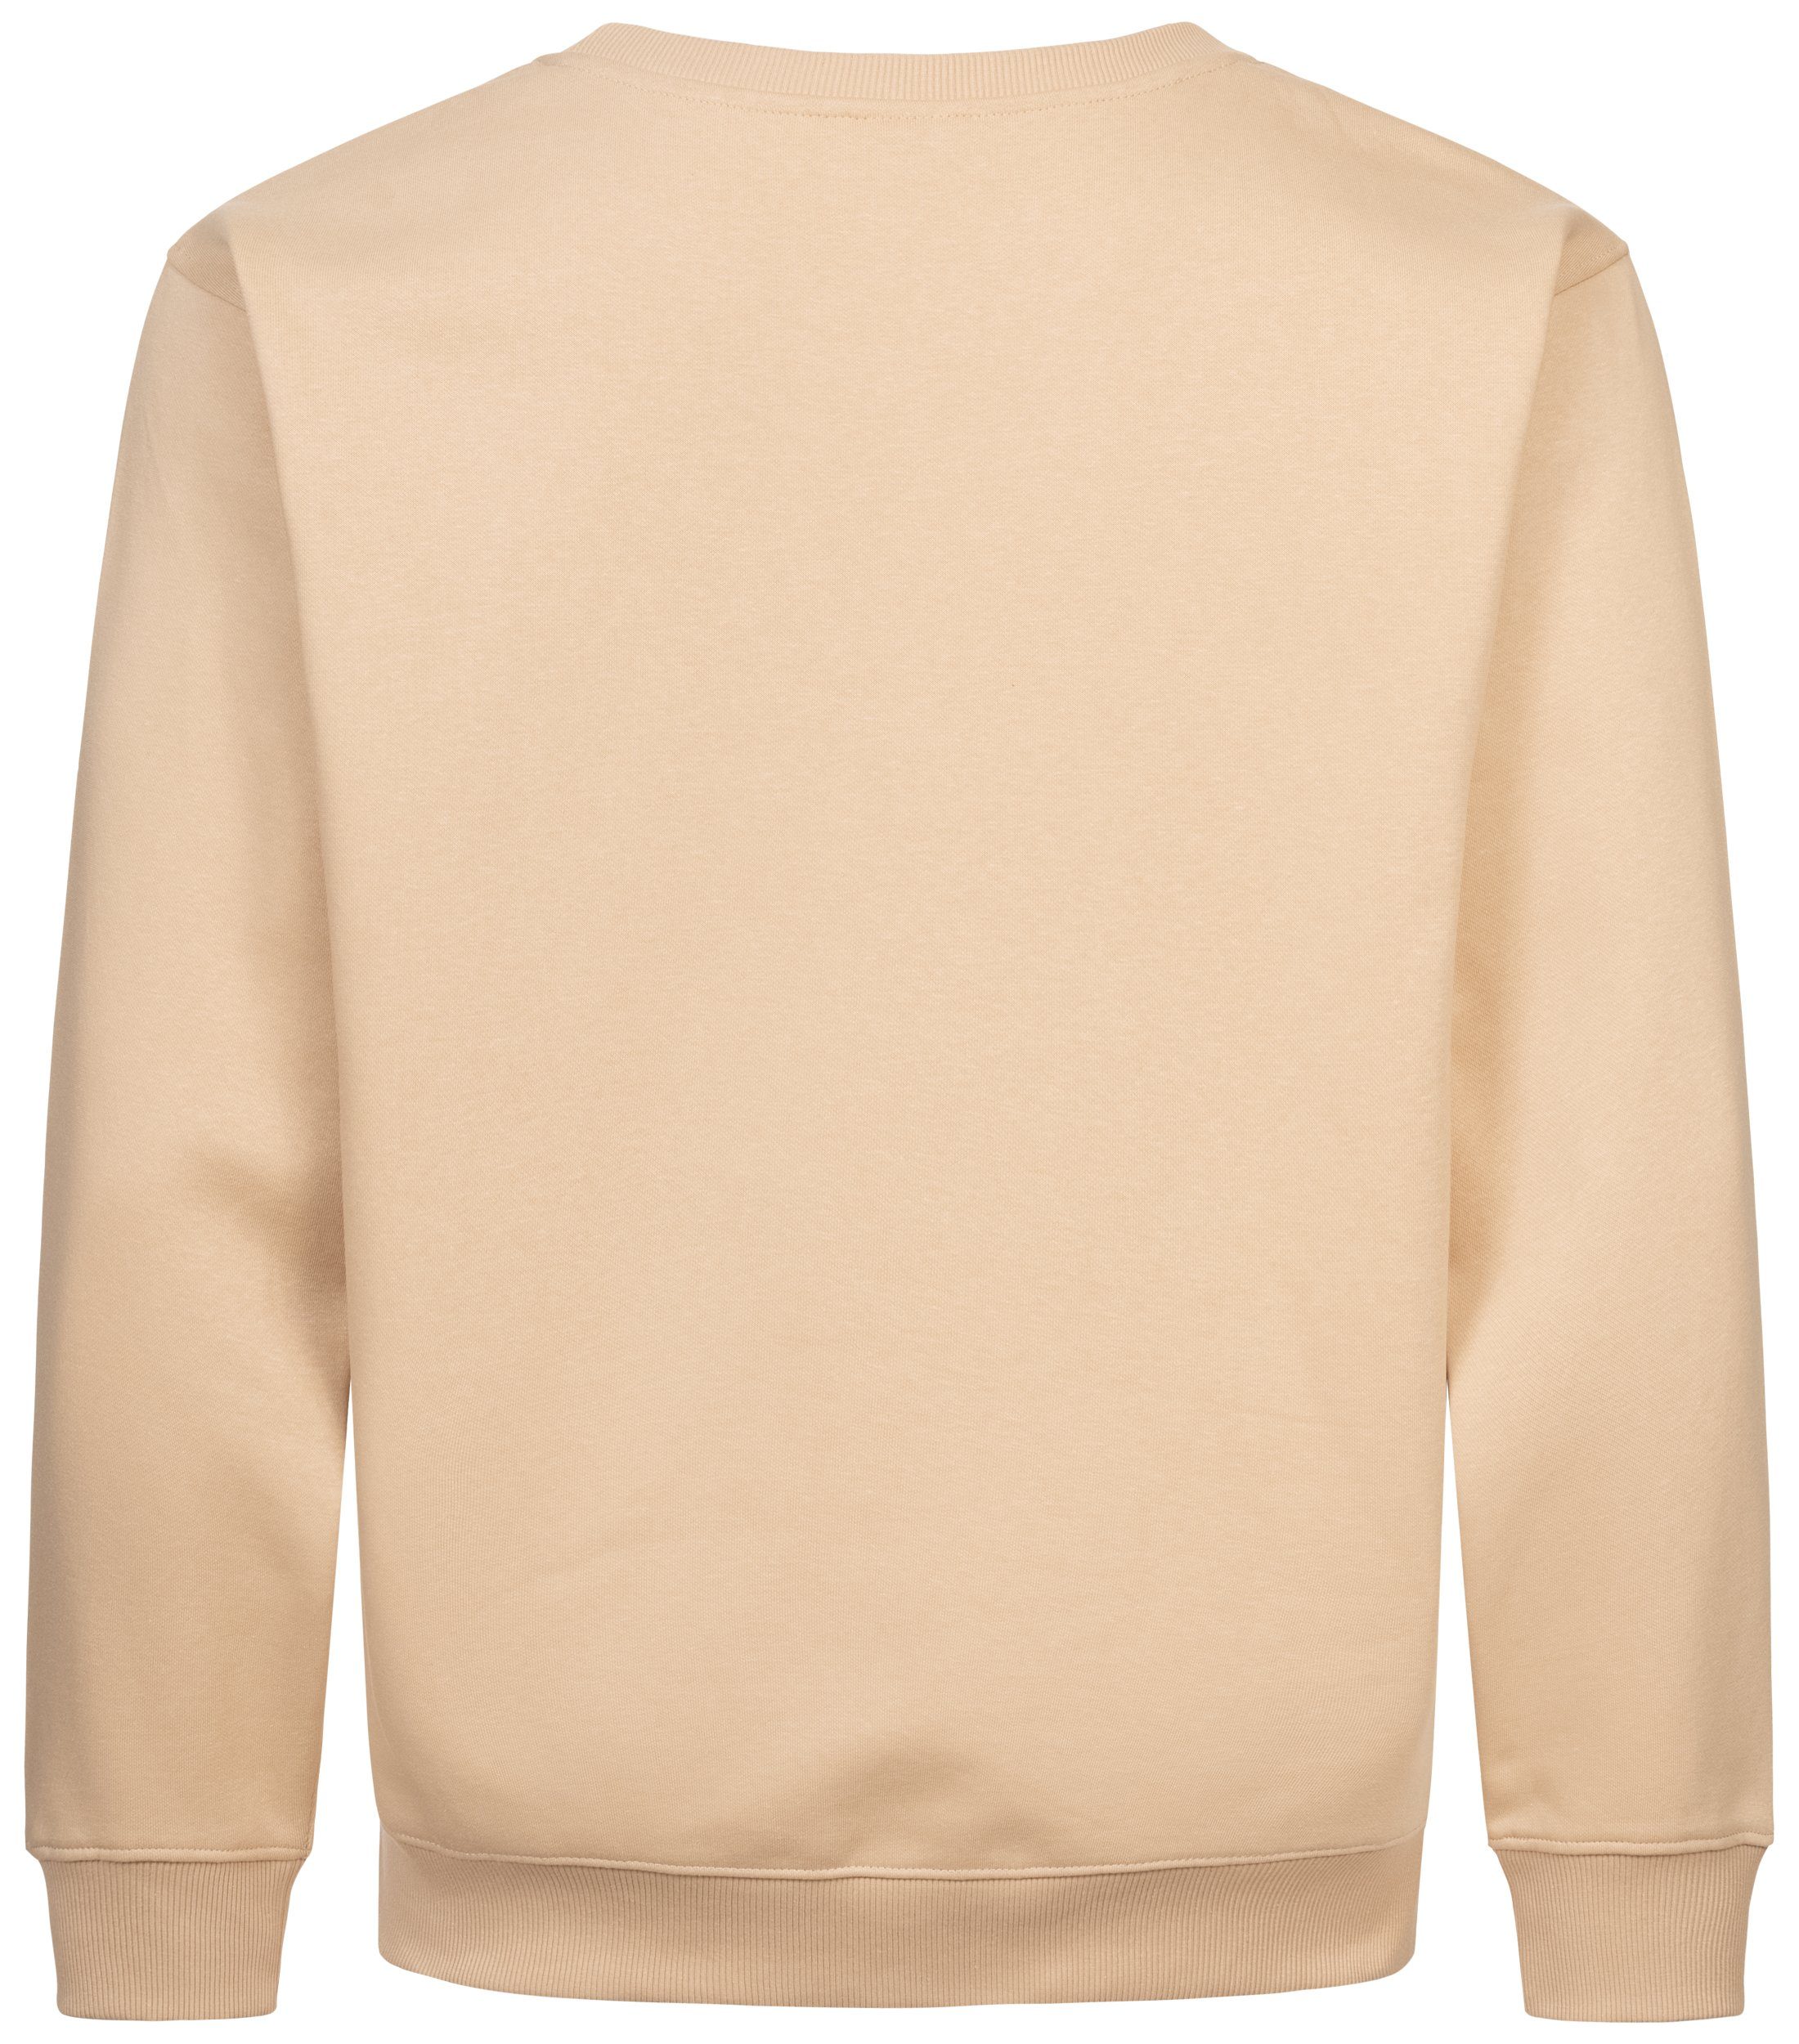 Pullover/ Cream Mercury Irish Männer Chilled Sweatshirt